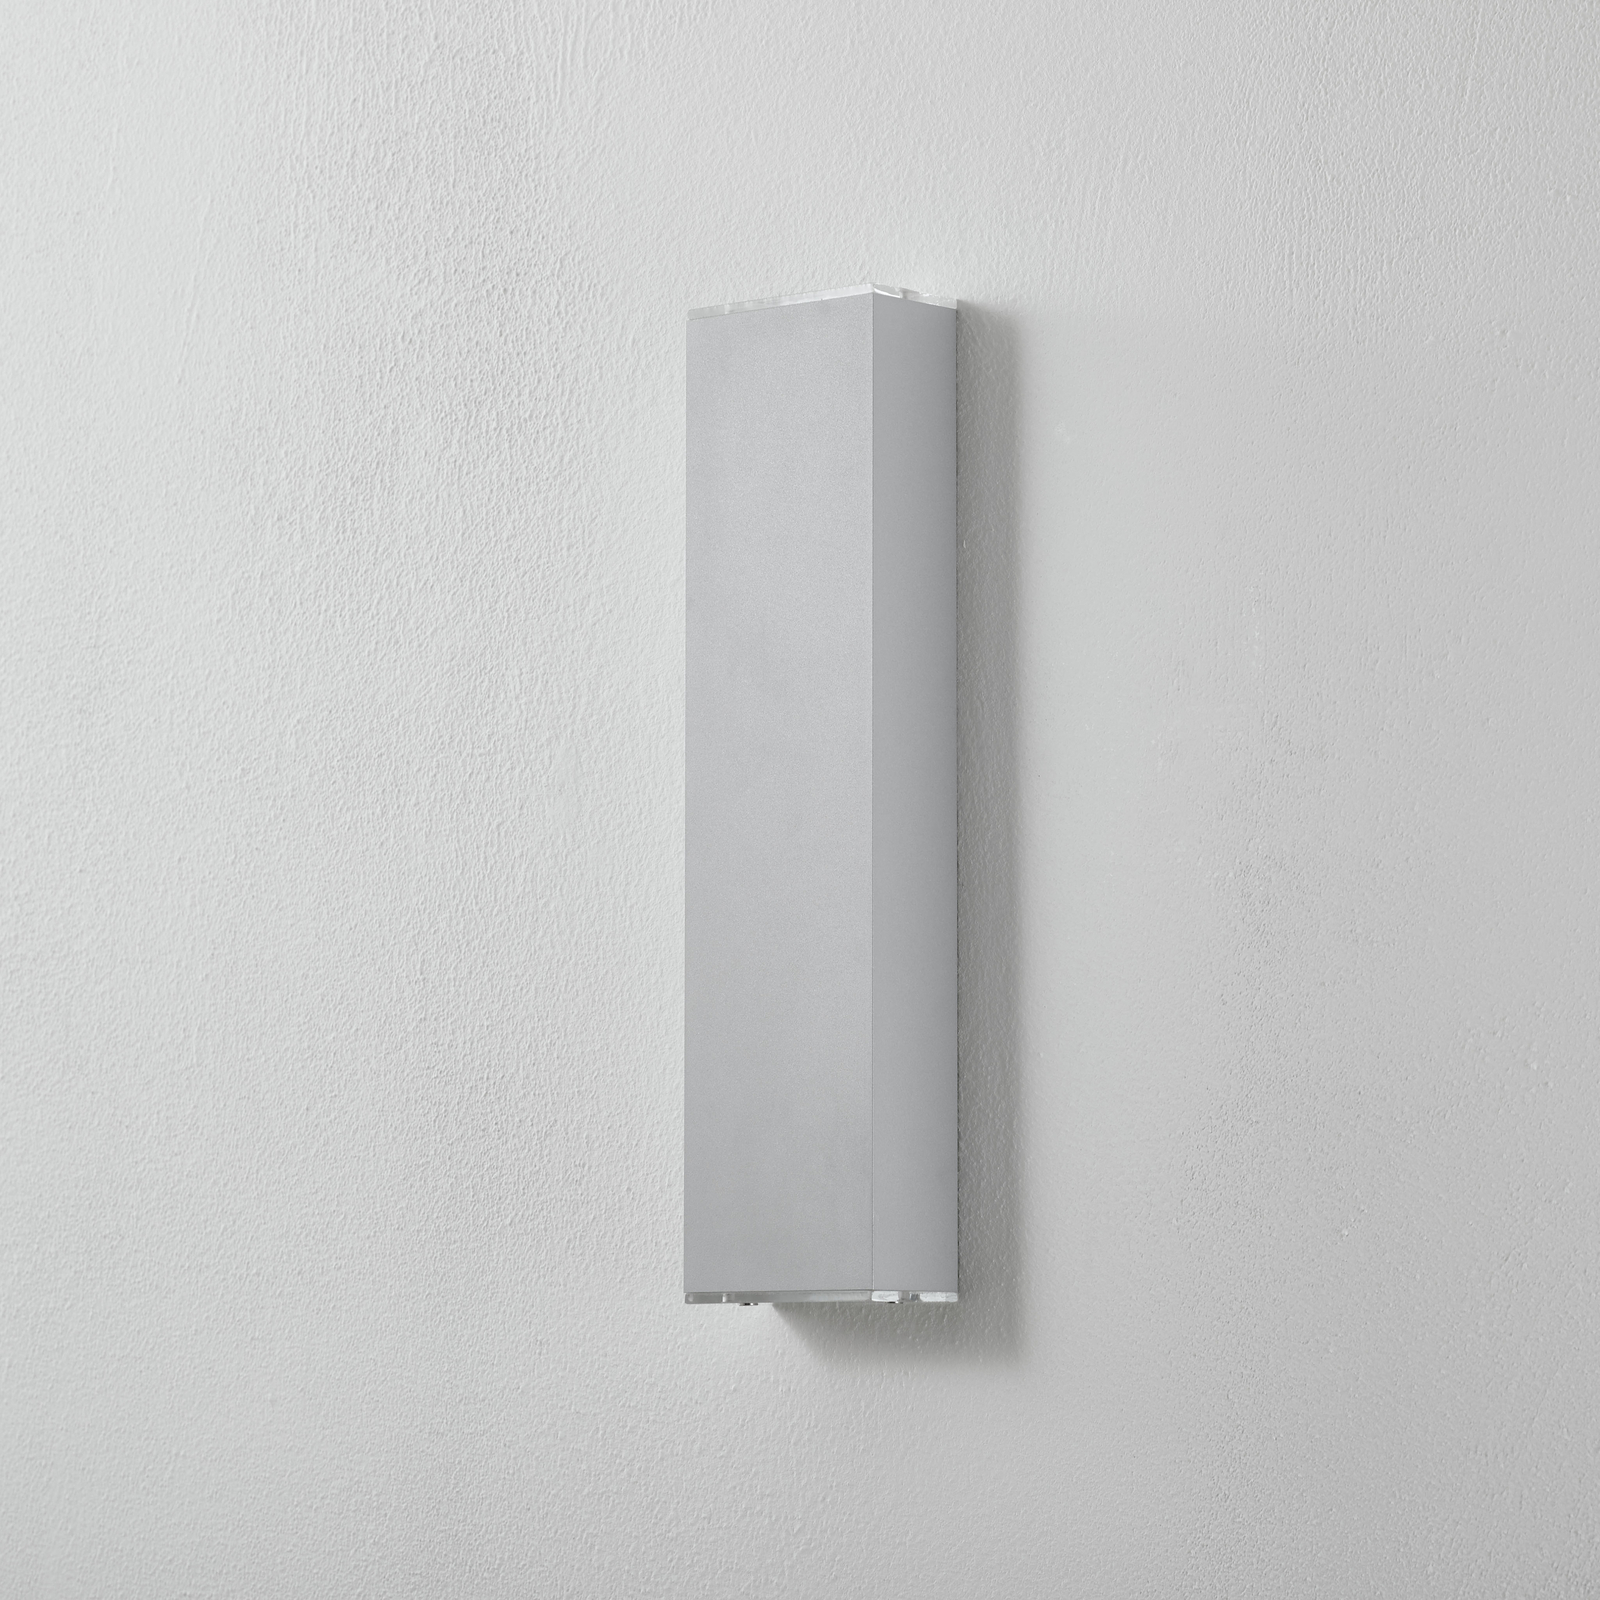 Lucande Anita LED wall light silver height 36 cm